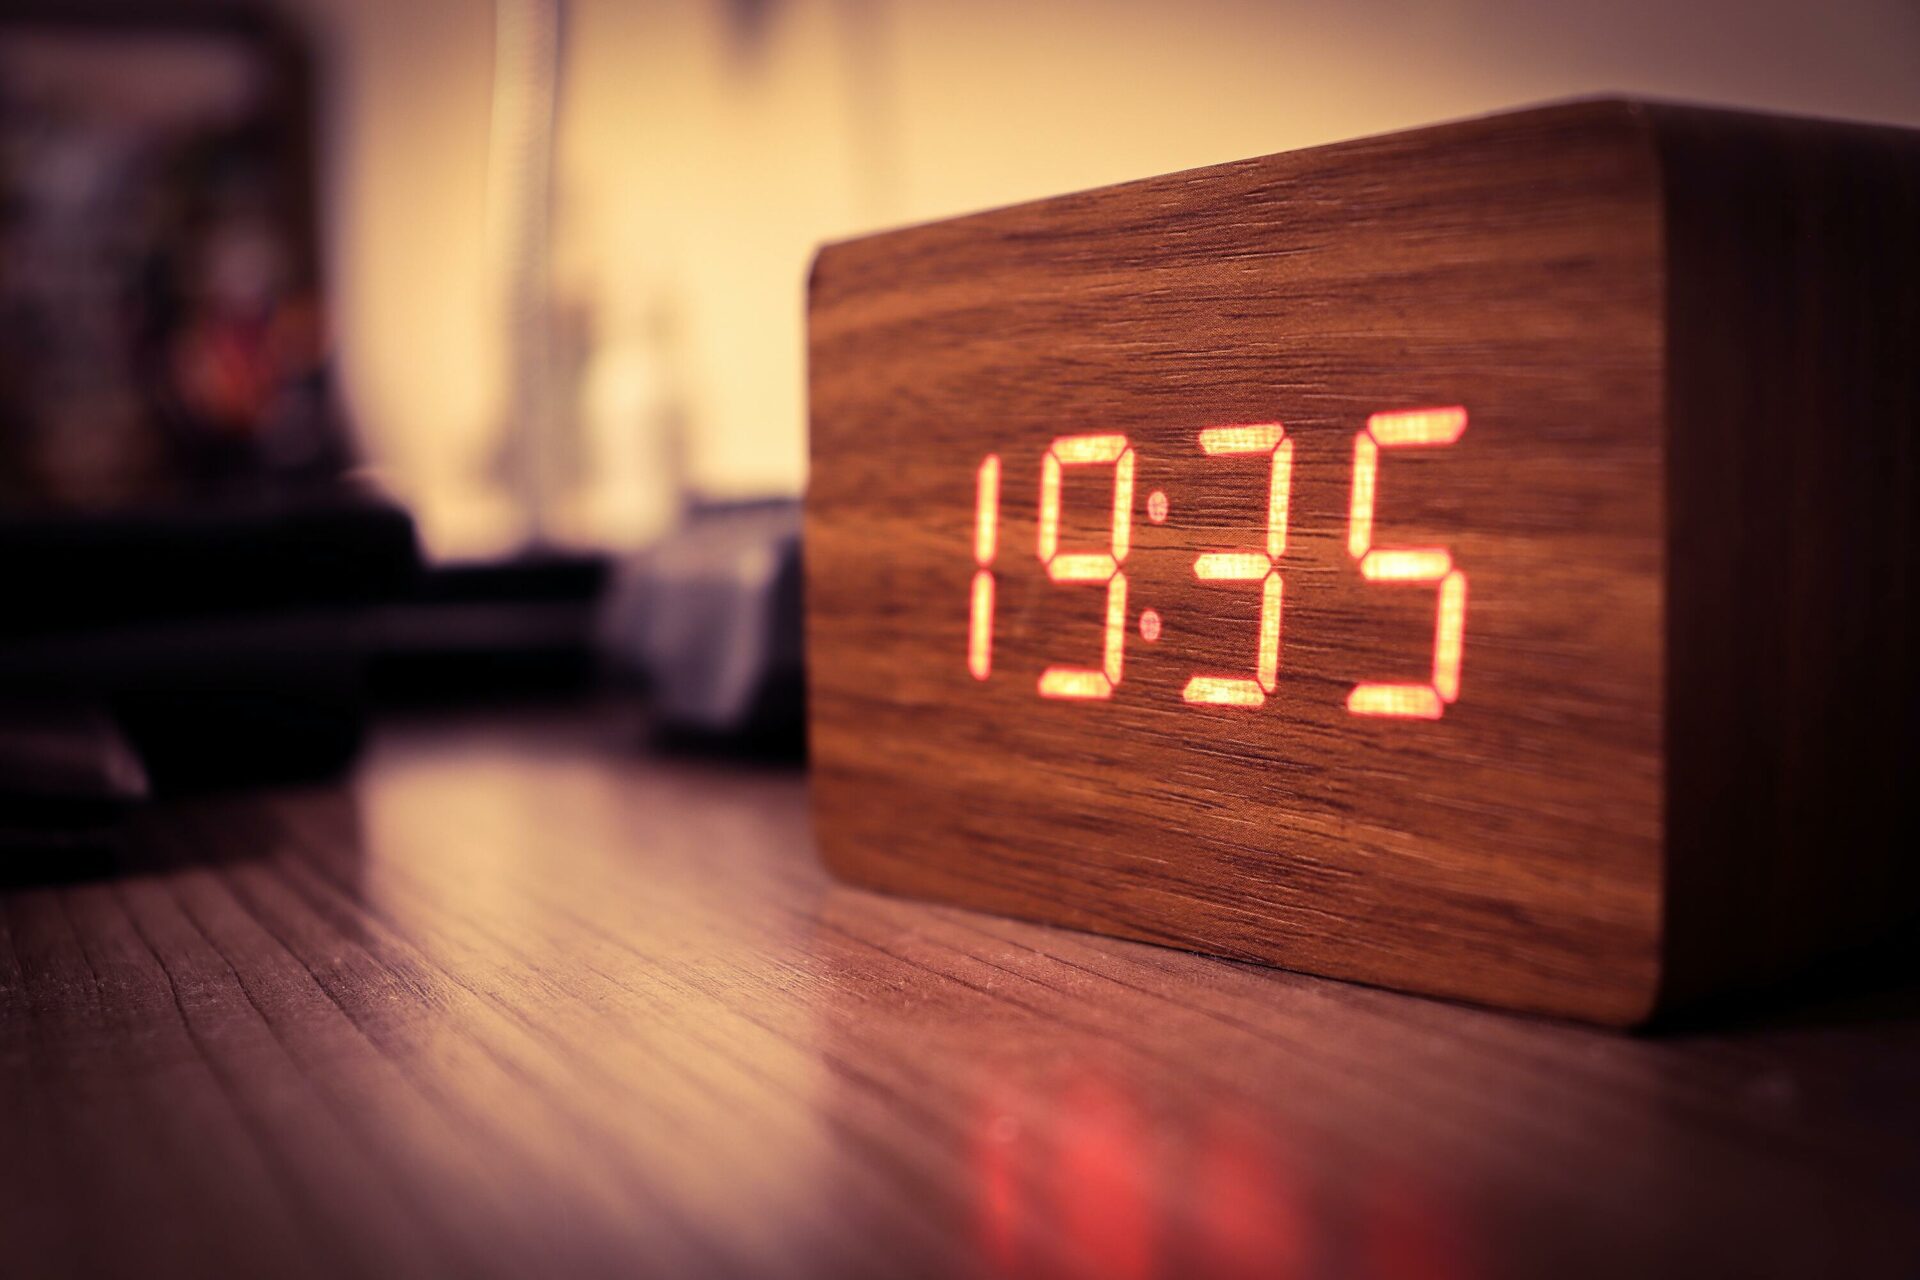 9 Of The Best Minimalist Alarm Clocks